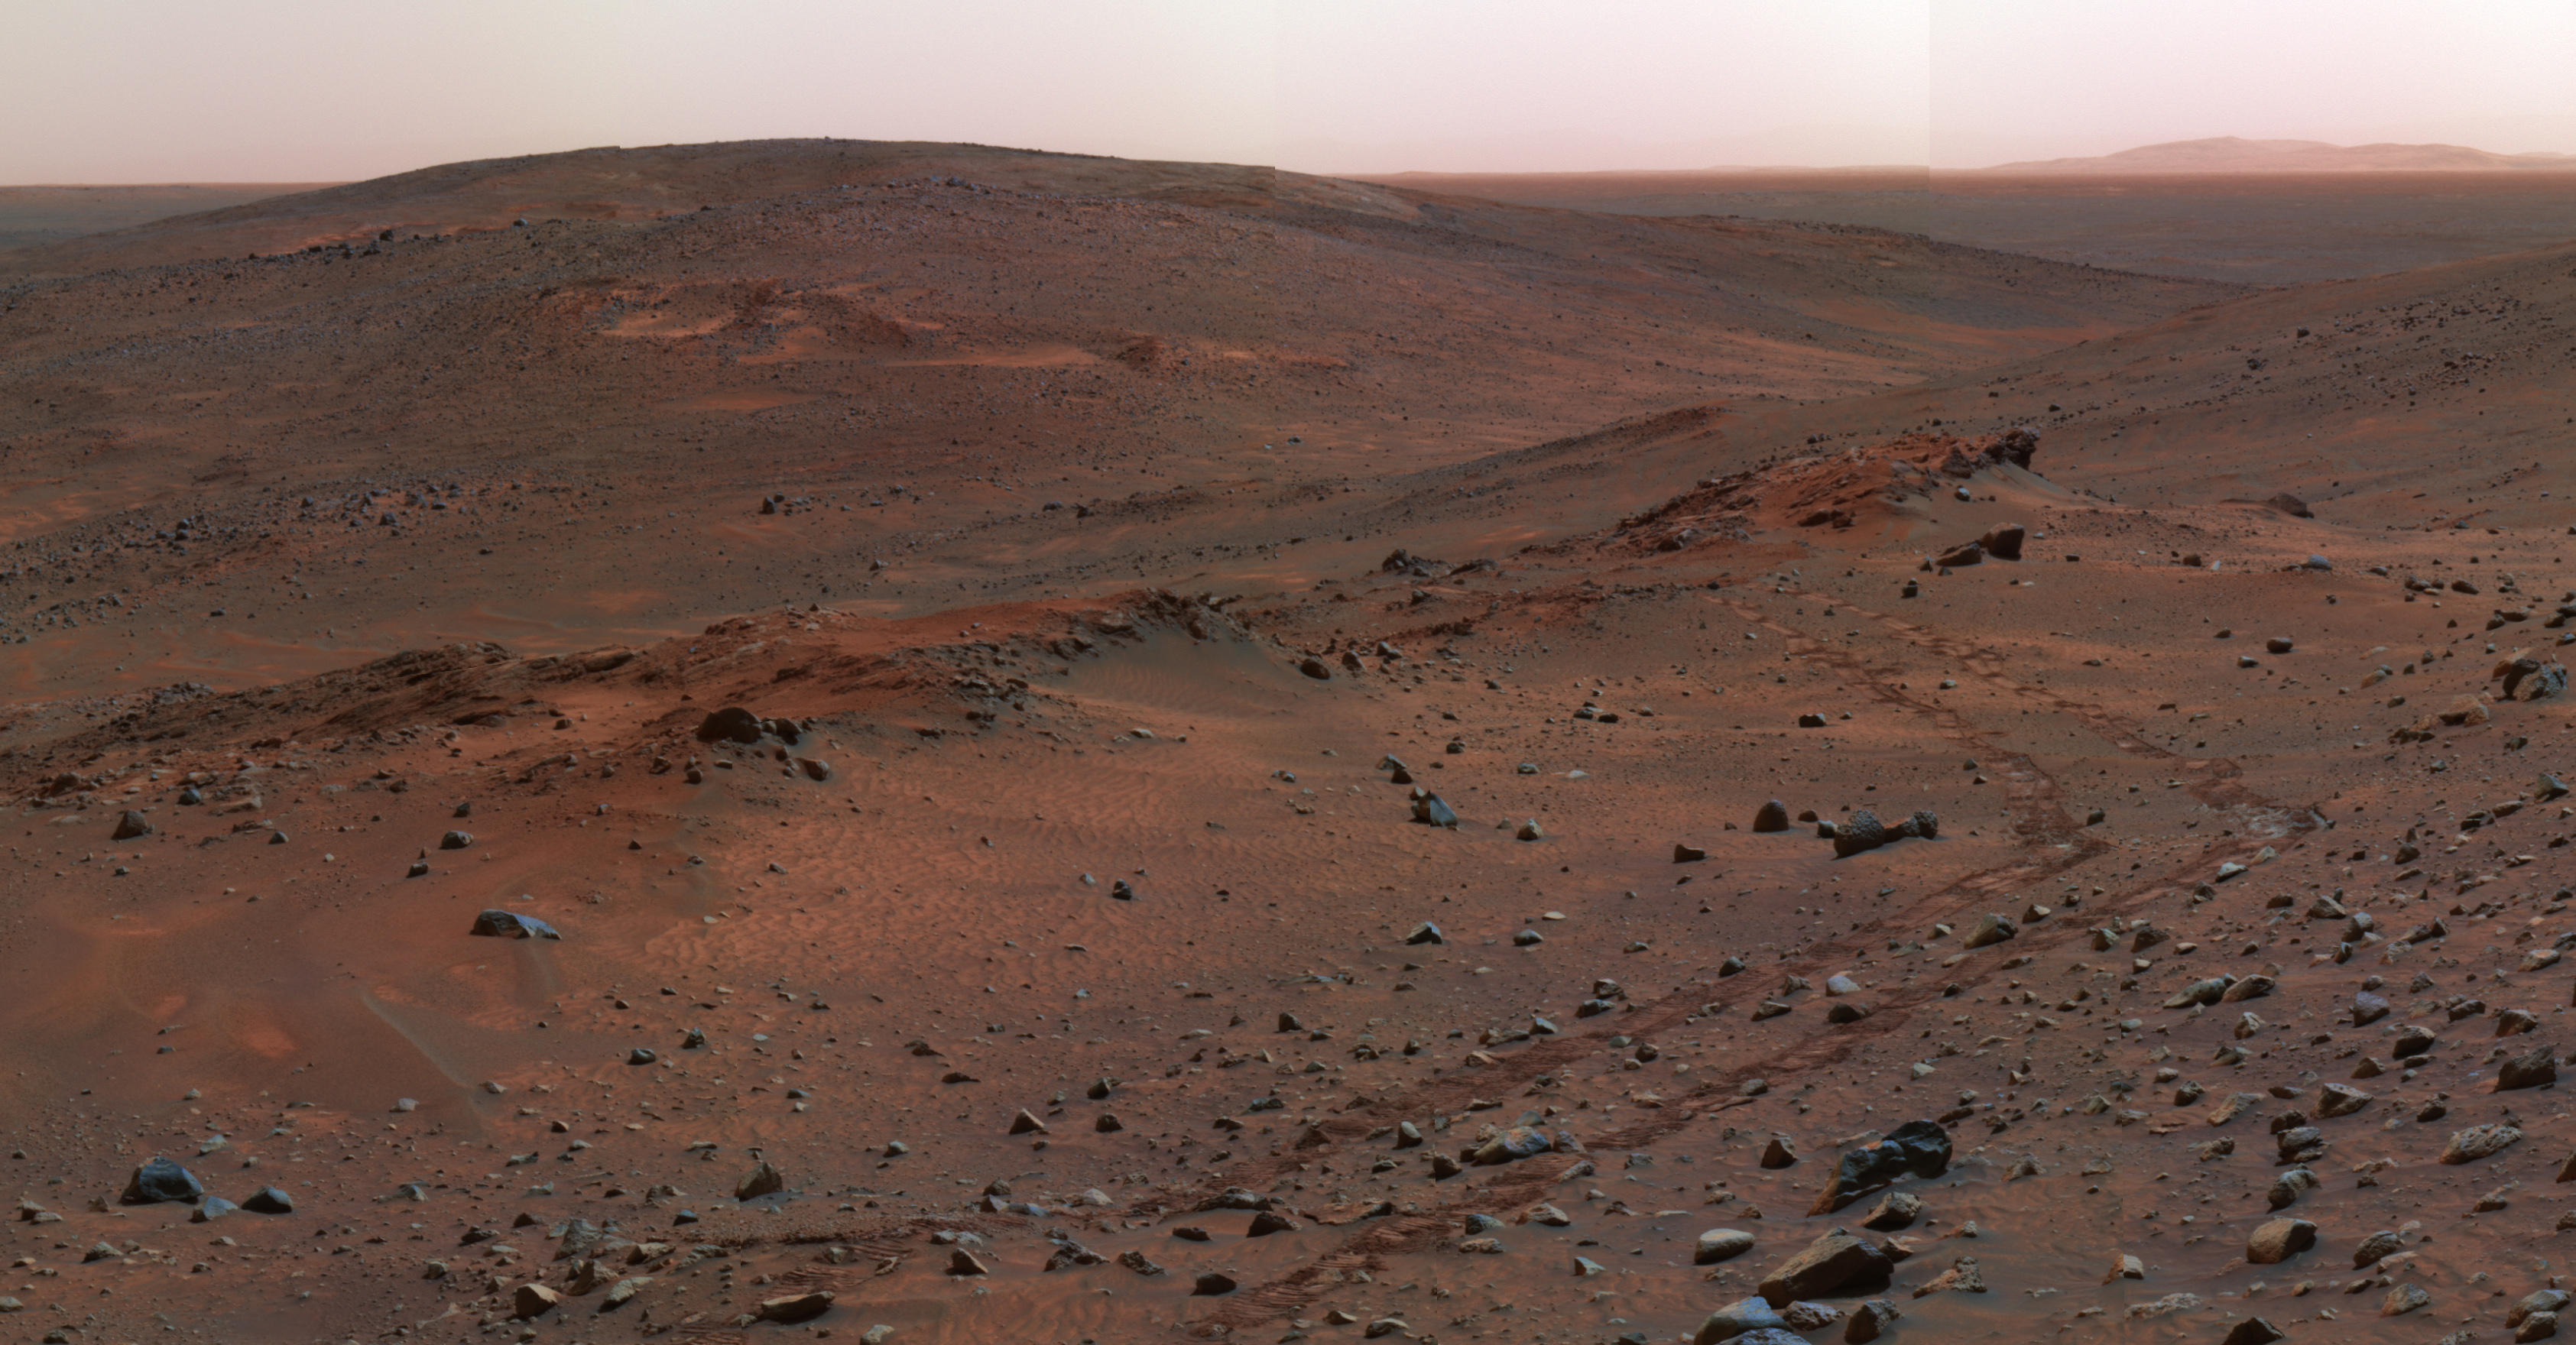 Vista de Marte. Imagen: NASA/JPL. Fuente: Wikipedia.